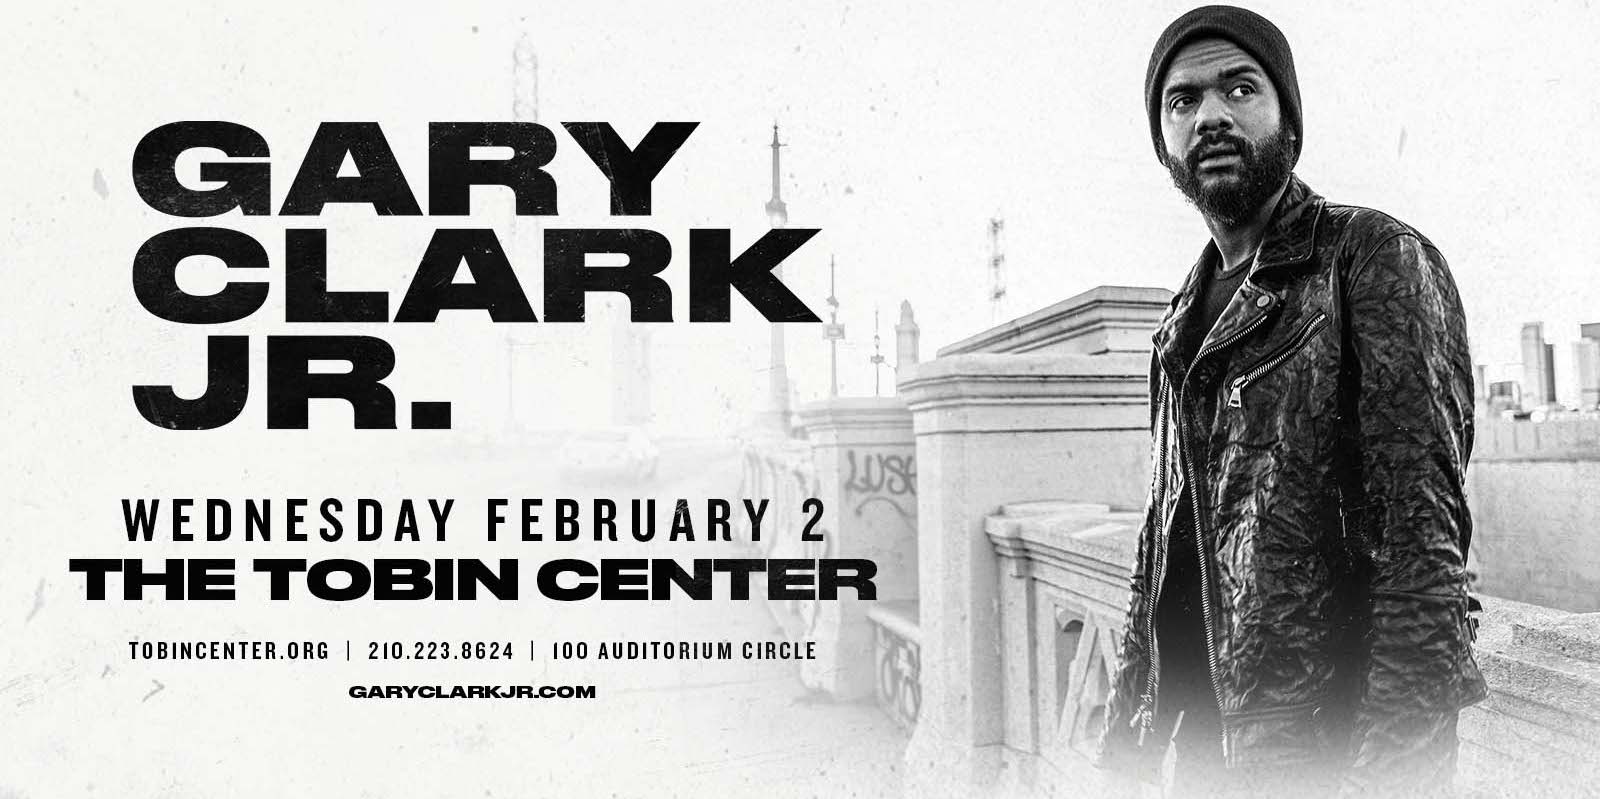 Gary Clark Jr. promotional image